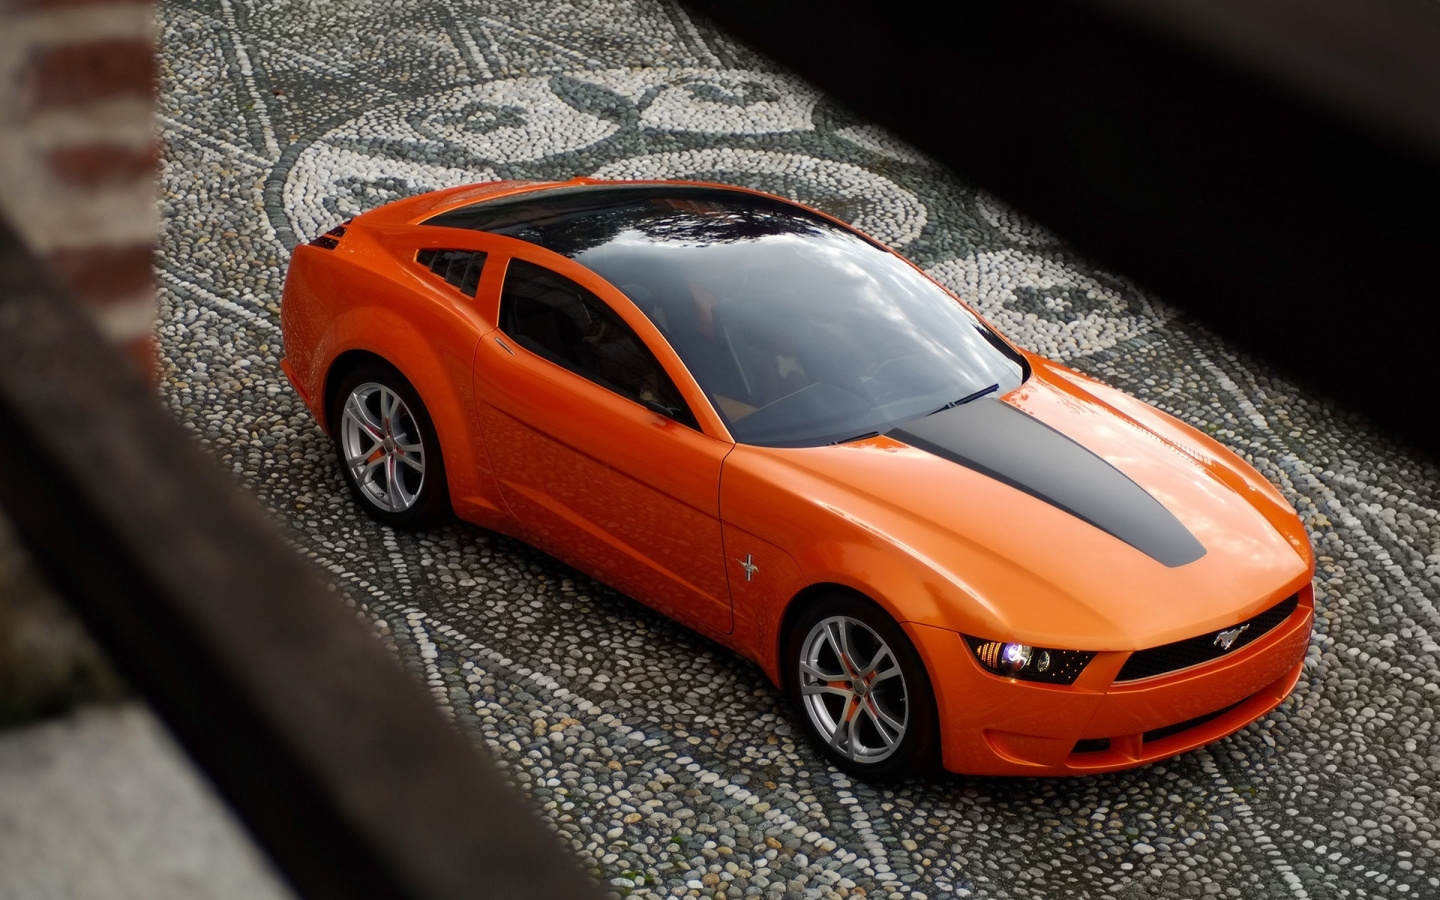 Ford Mustang Giugiaro Concept for 1440 x 900 widescreen resolution